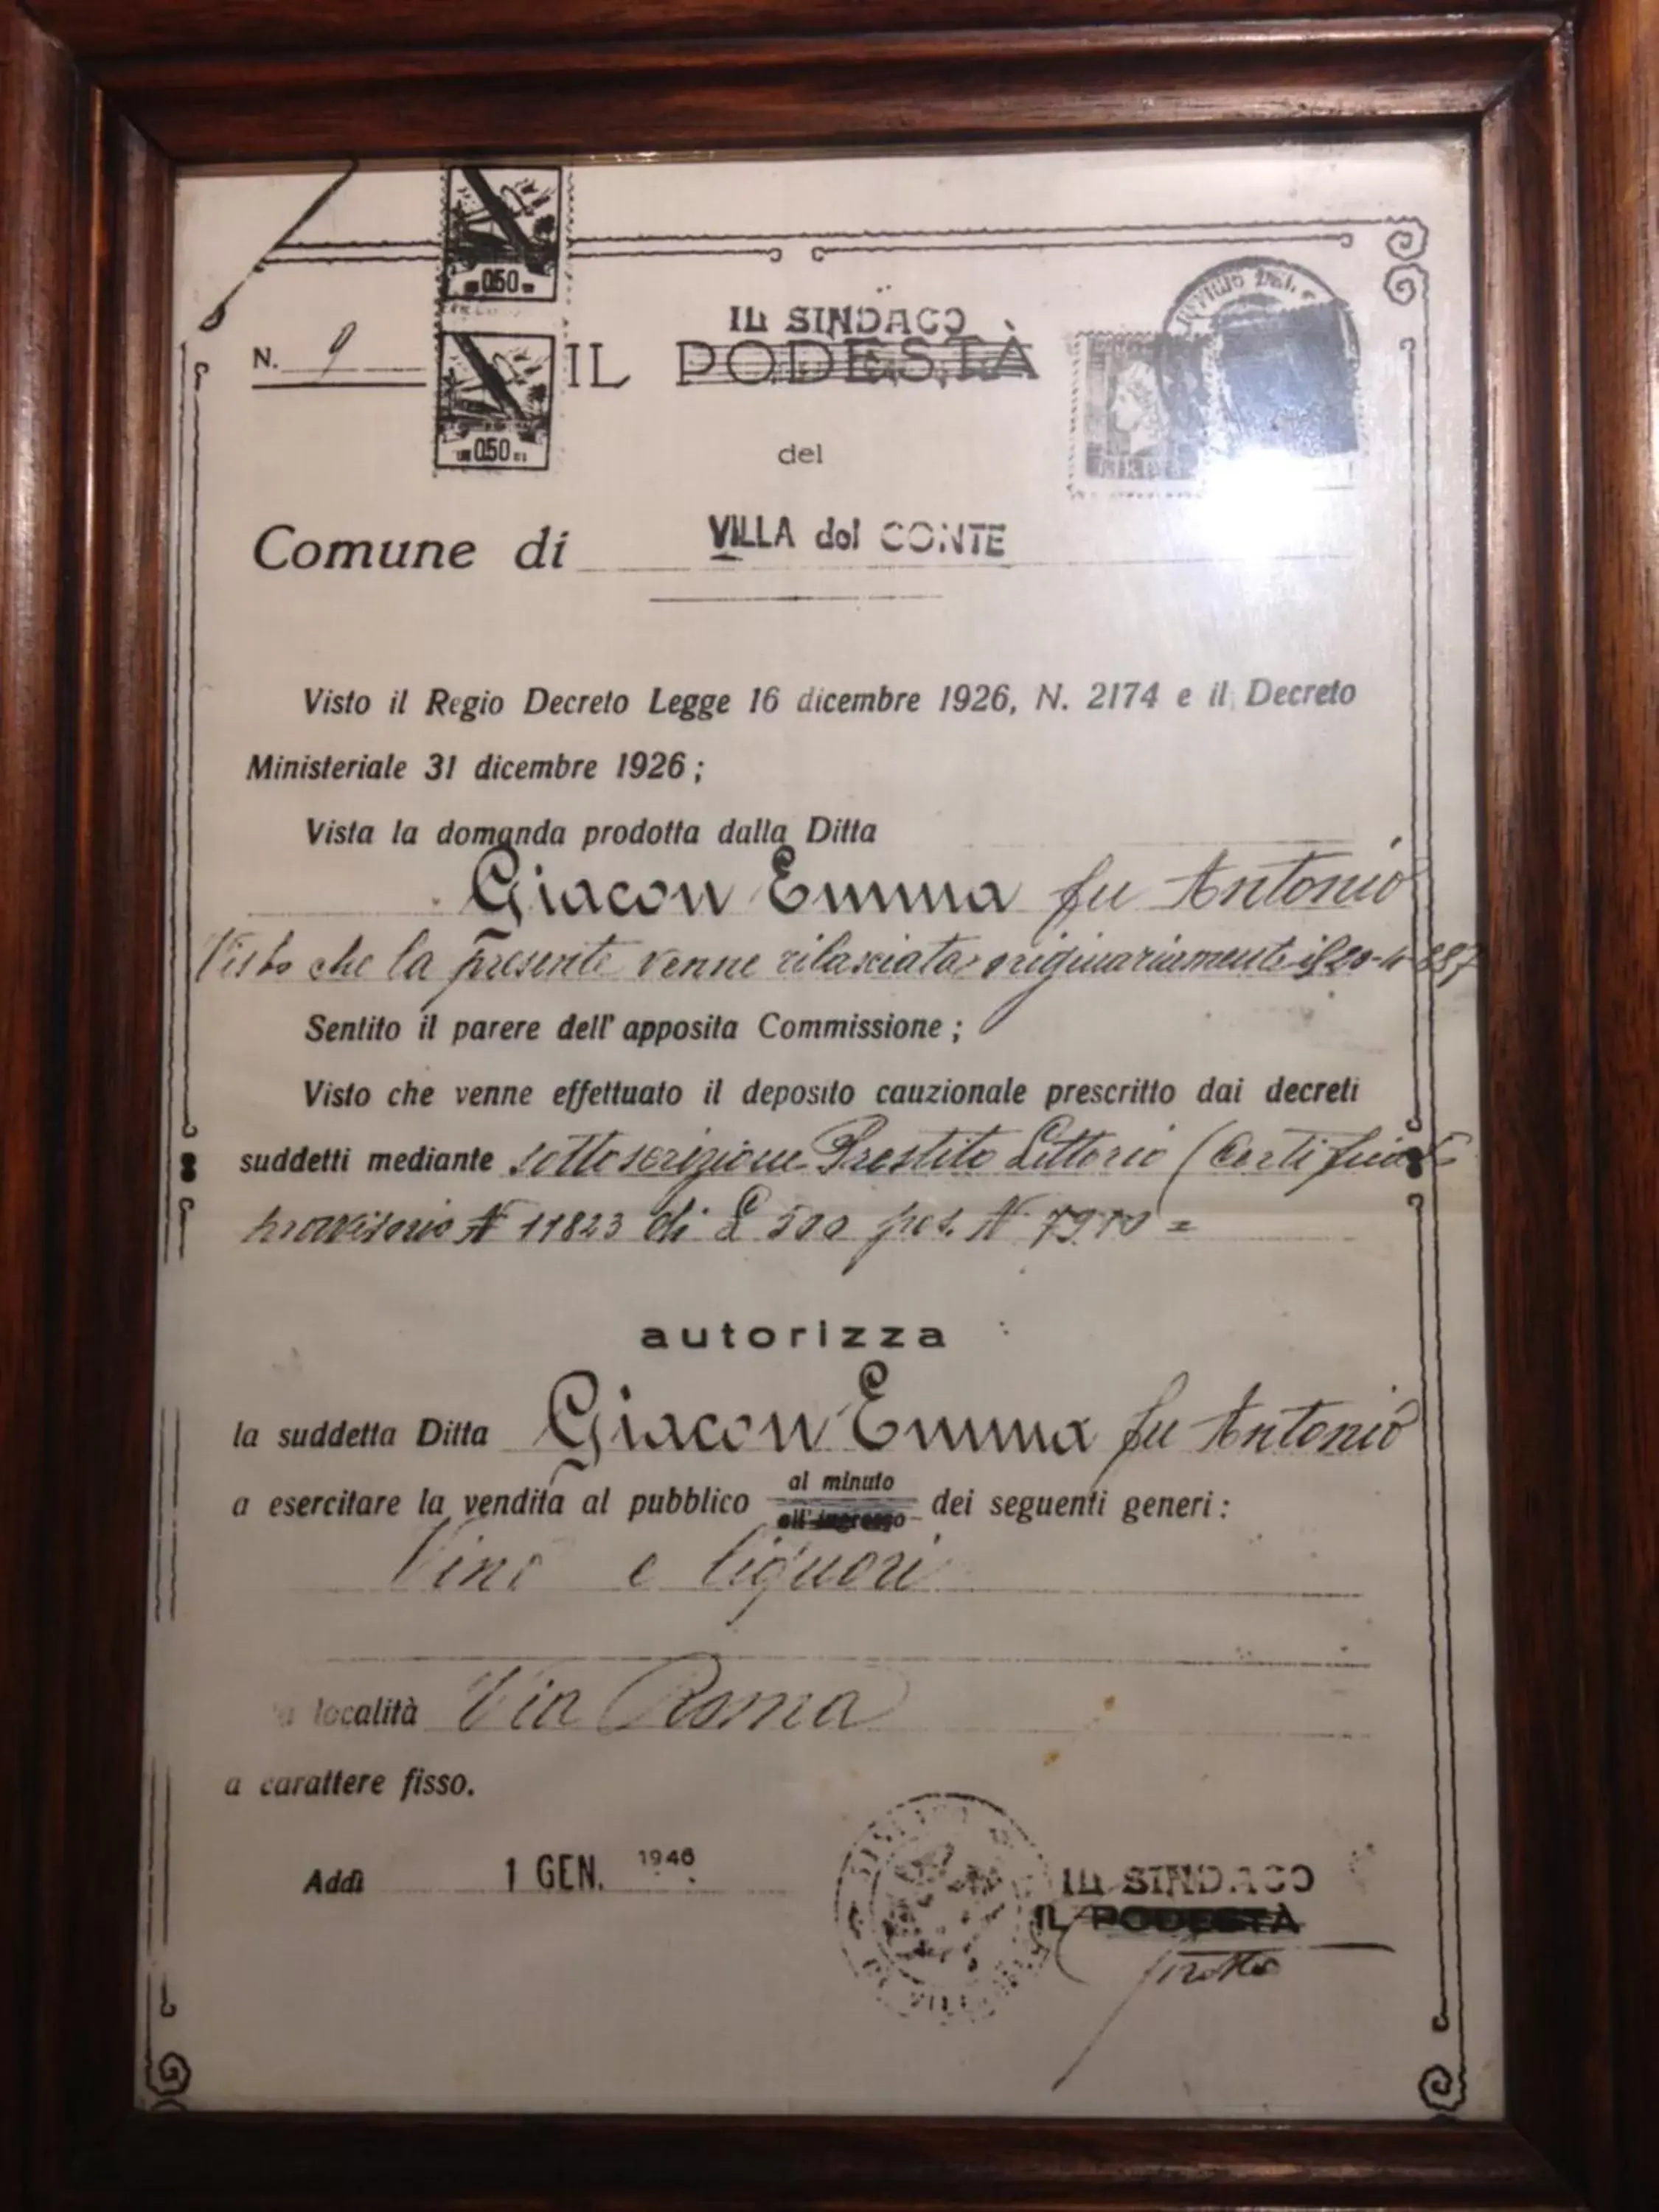 Certificate/Award in Hotel Pizzeria Ristorante "Al Leone"